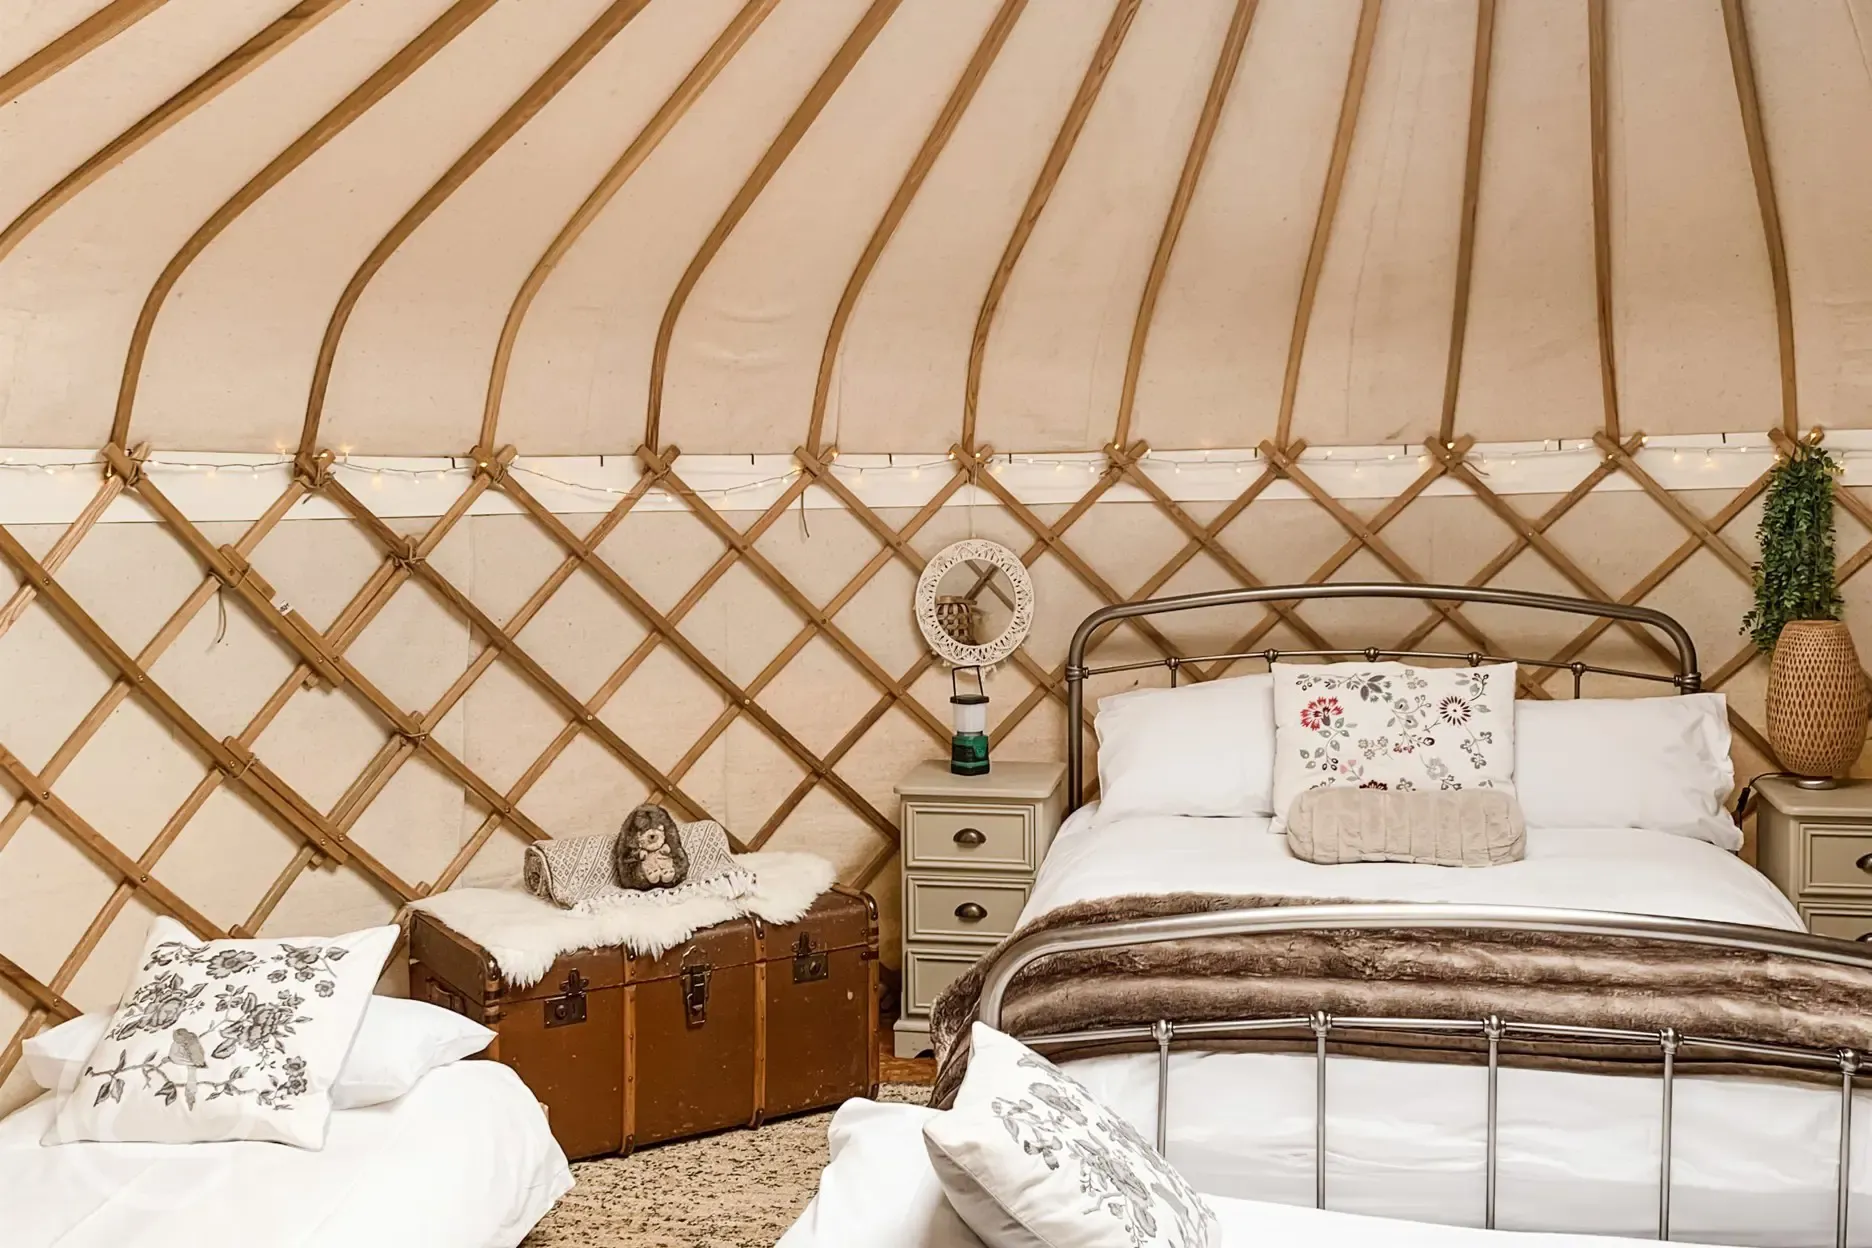 Inside yurts